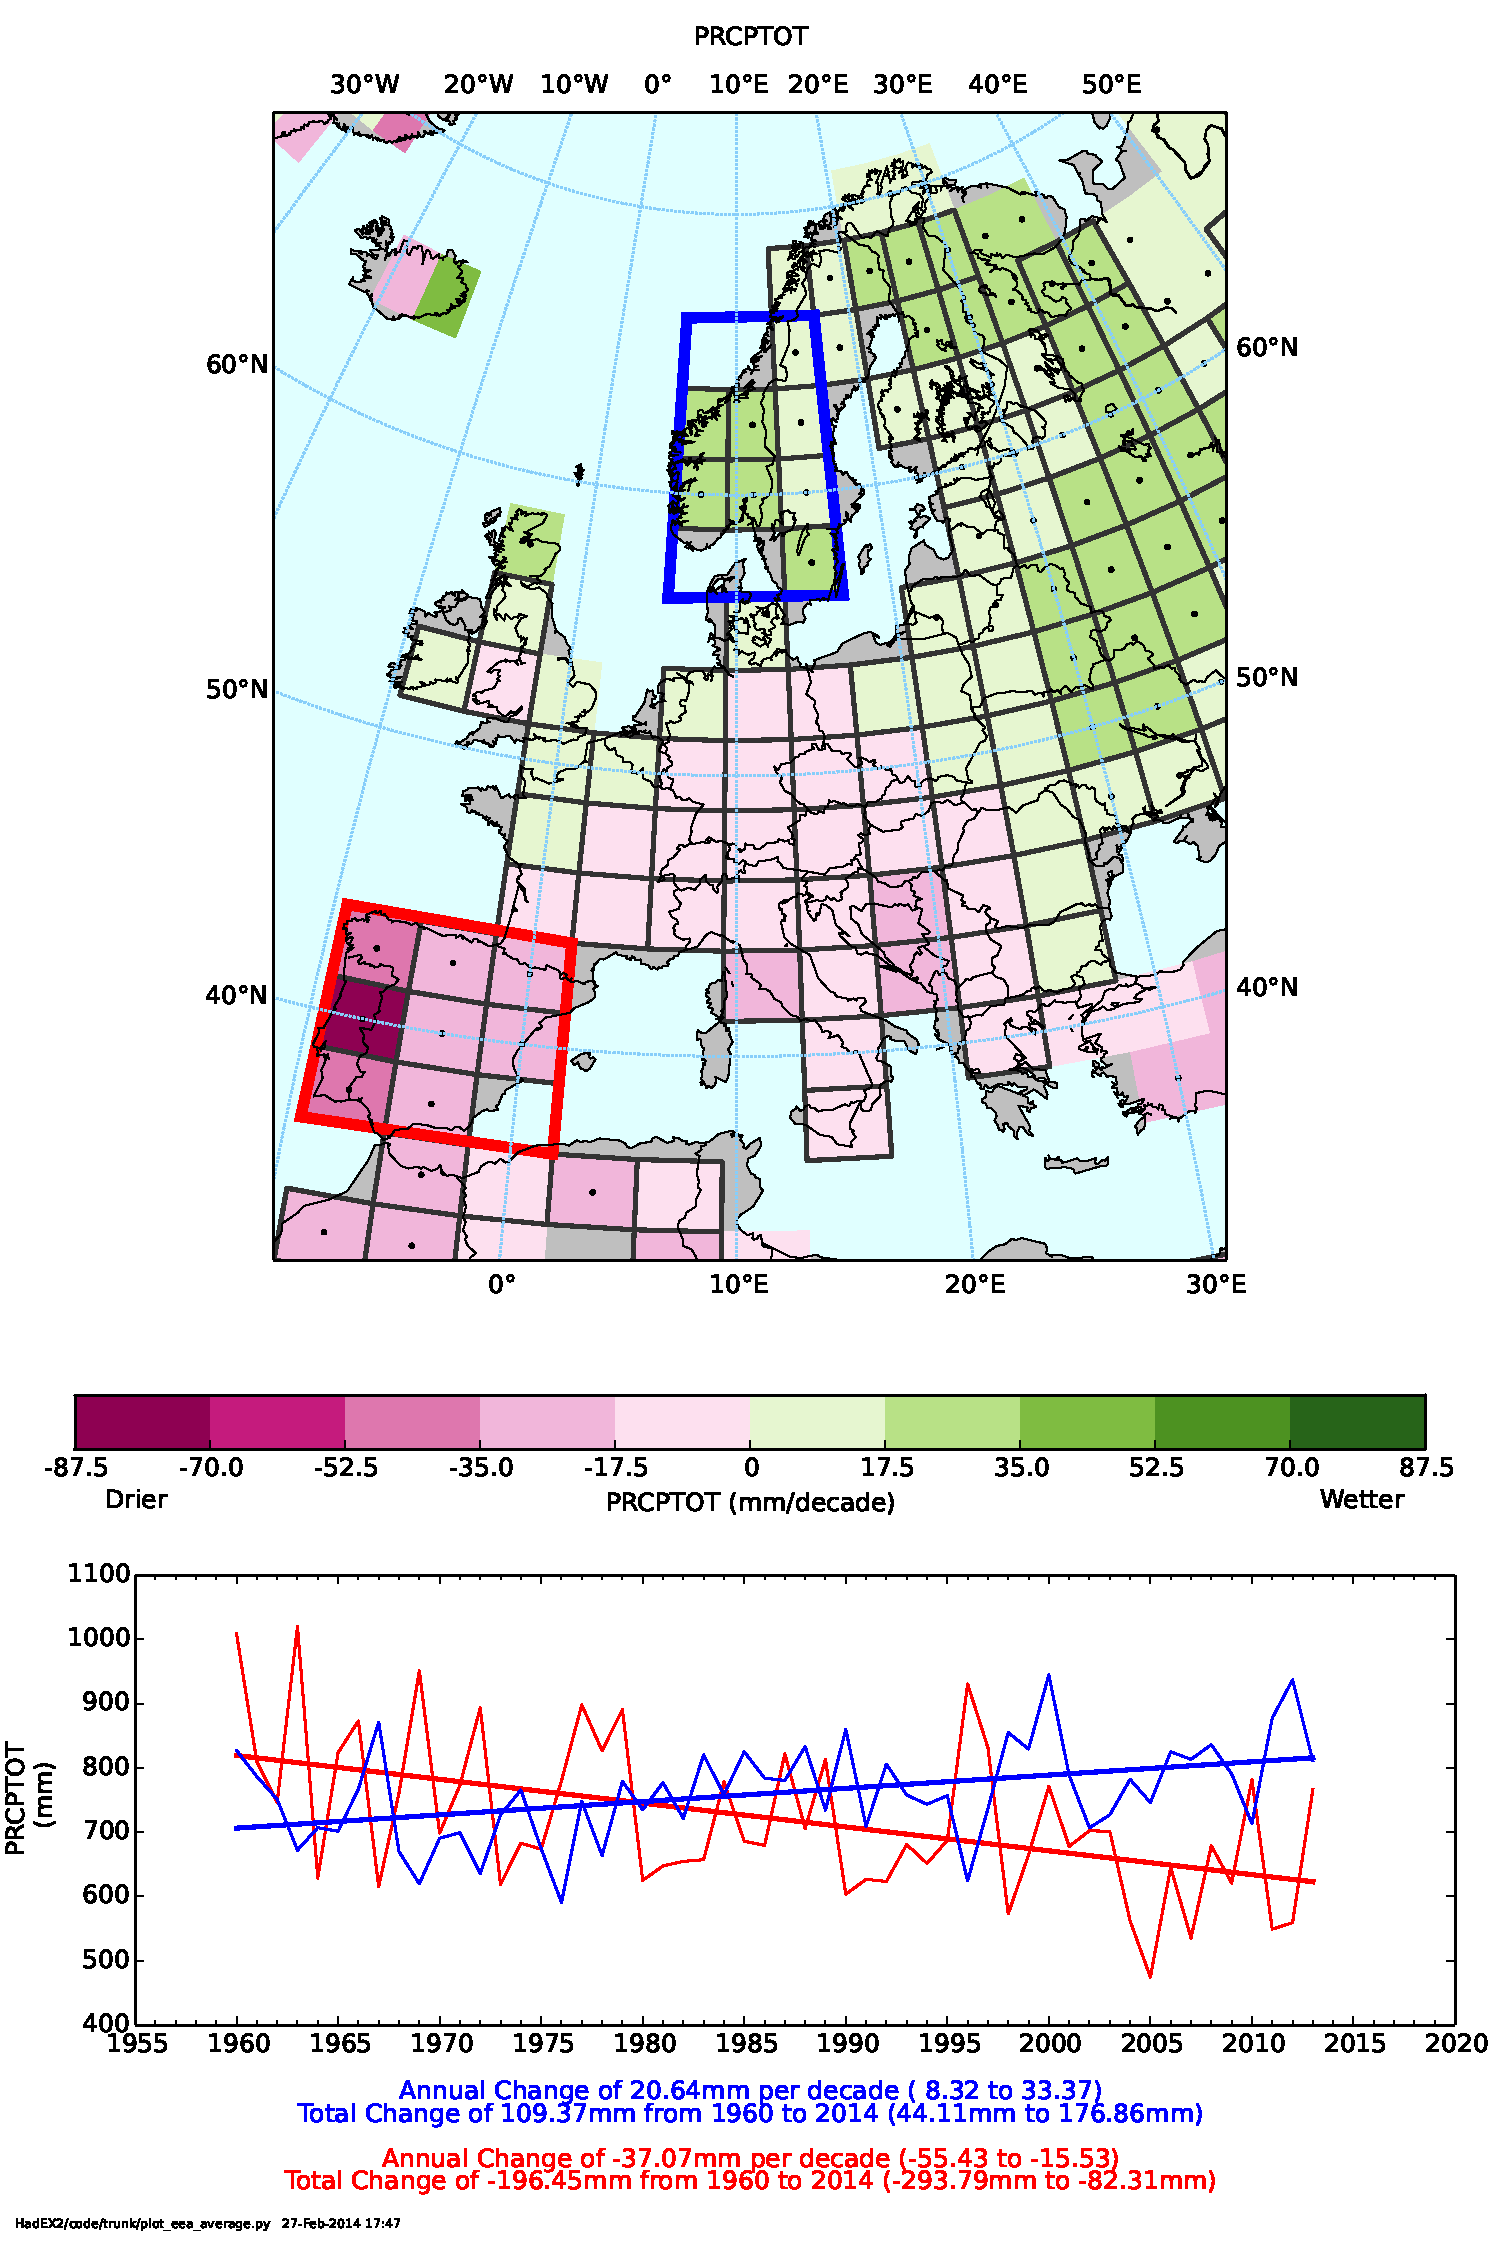 Trends in annual precipitation across Europe